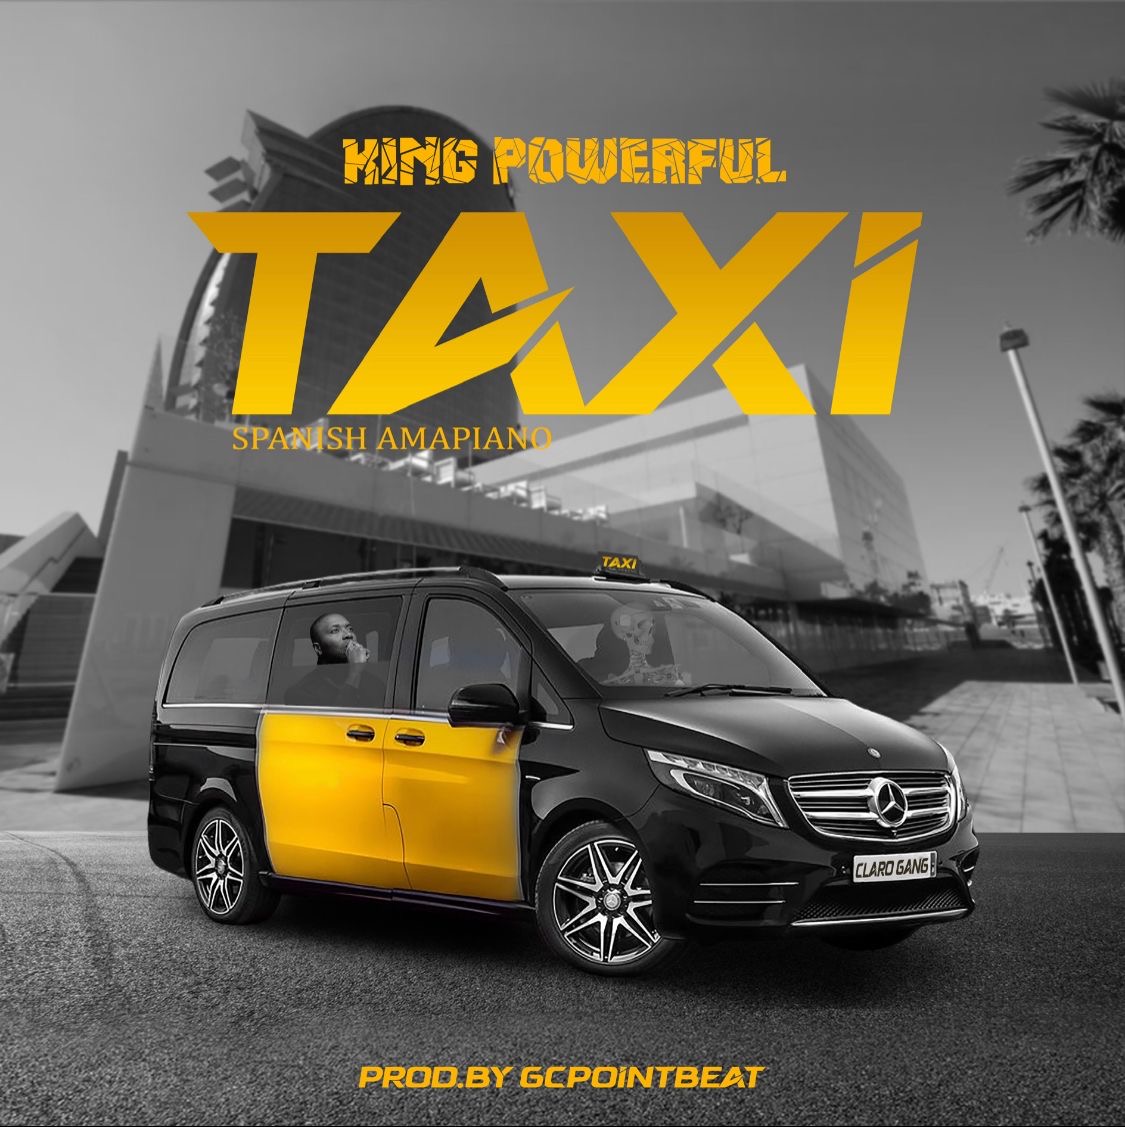 King Powerful - Taxi